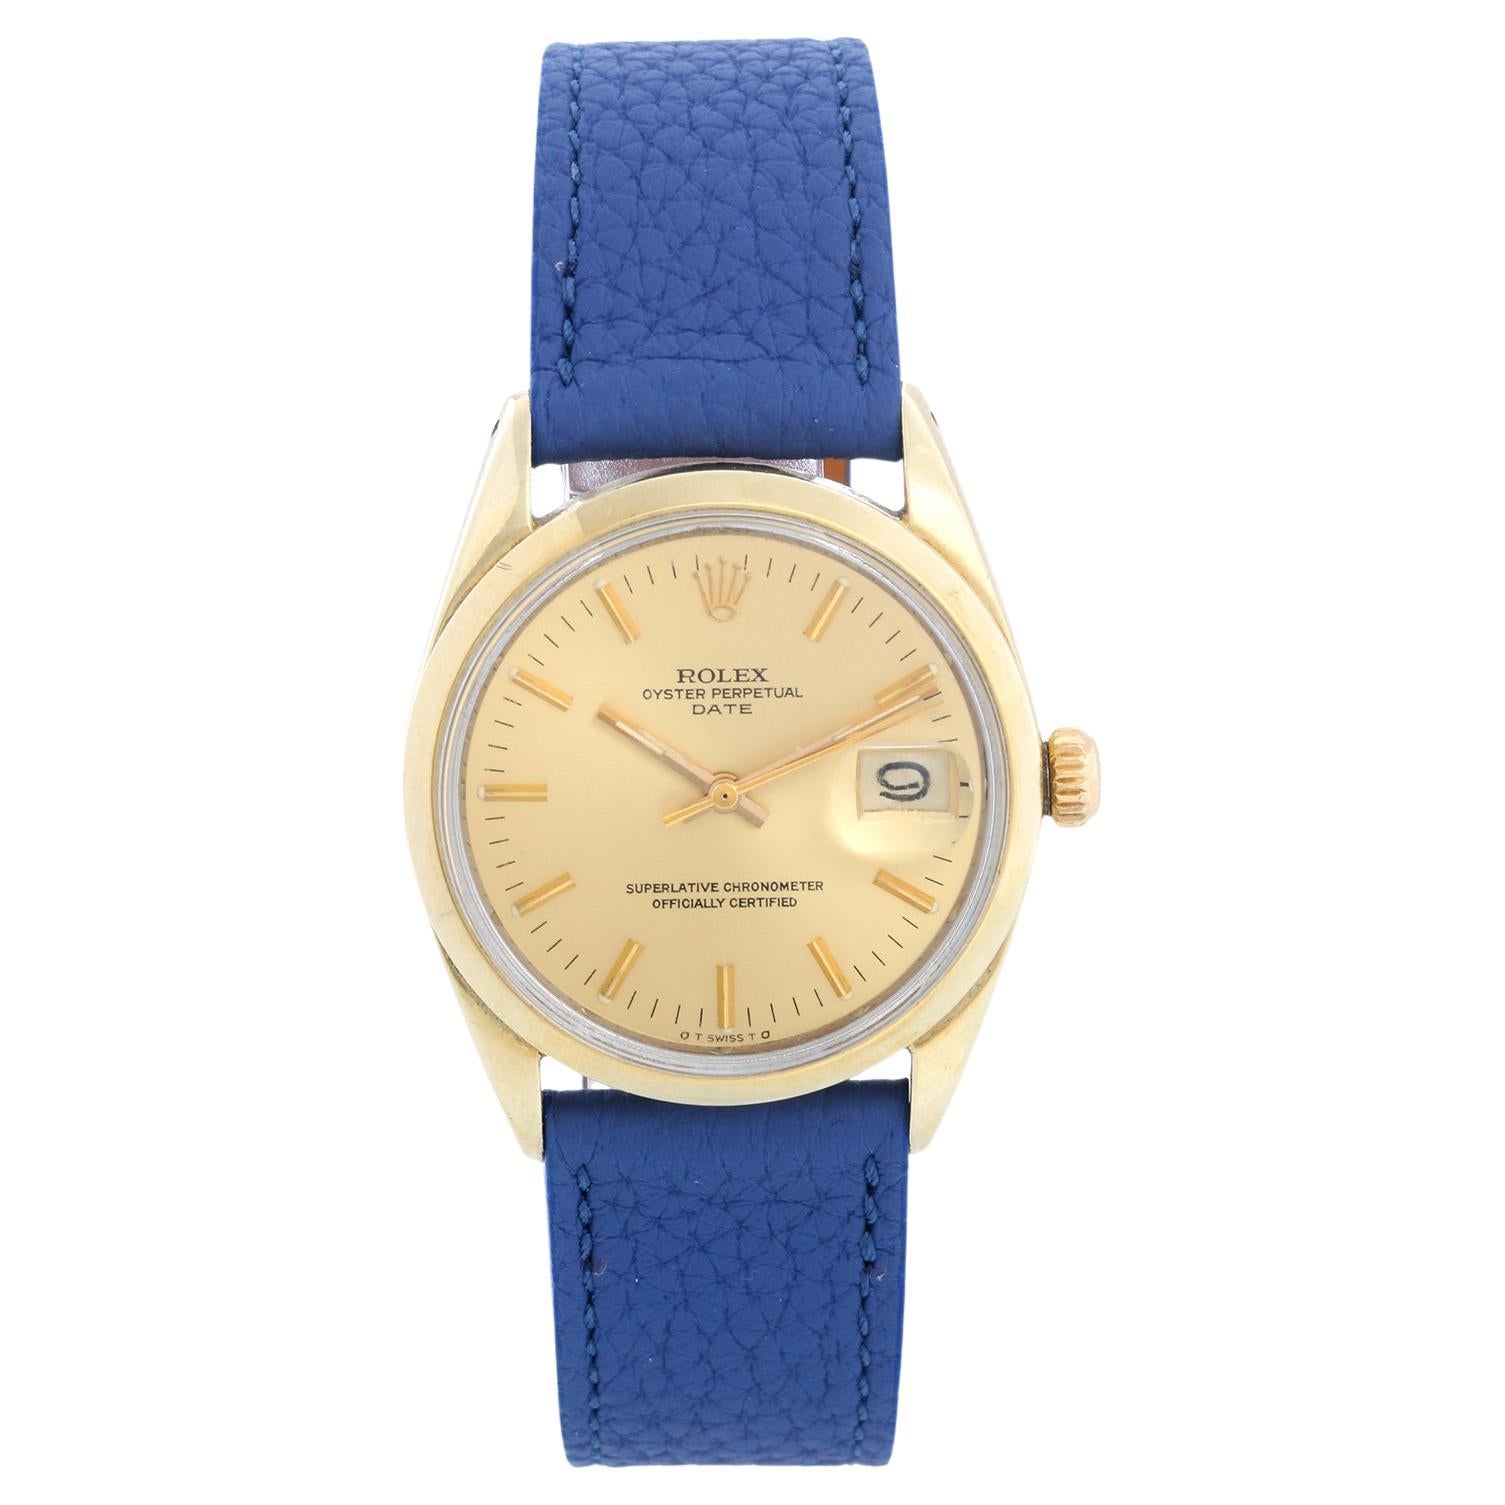 Rolex Date Men's Vintage 14k Gold Shell Watch, 1550